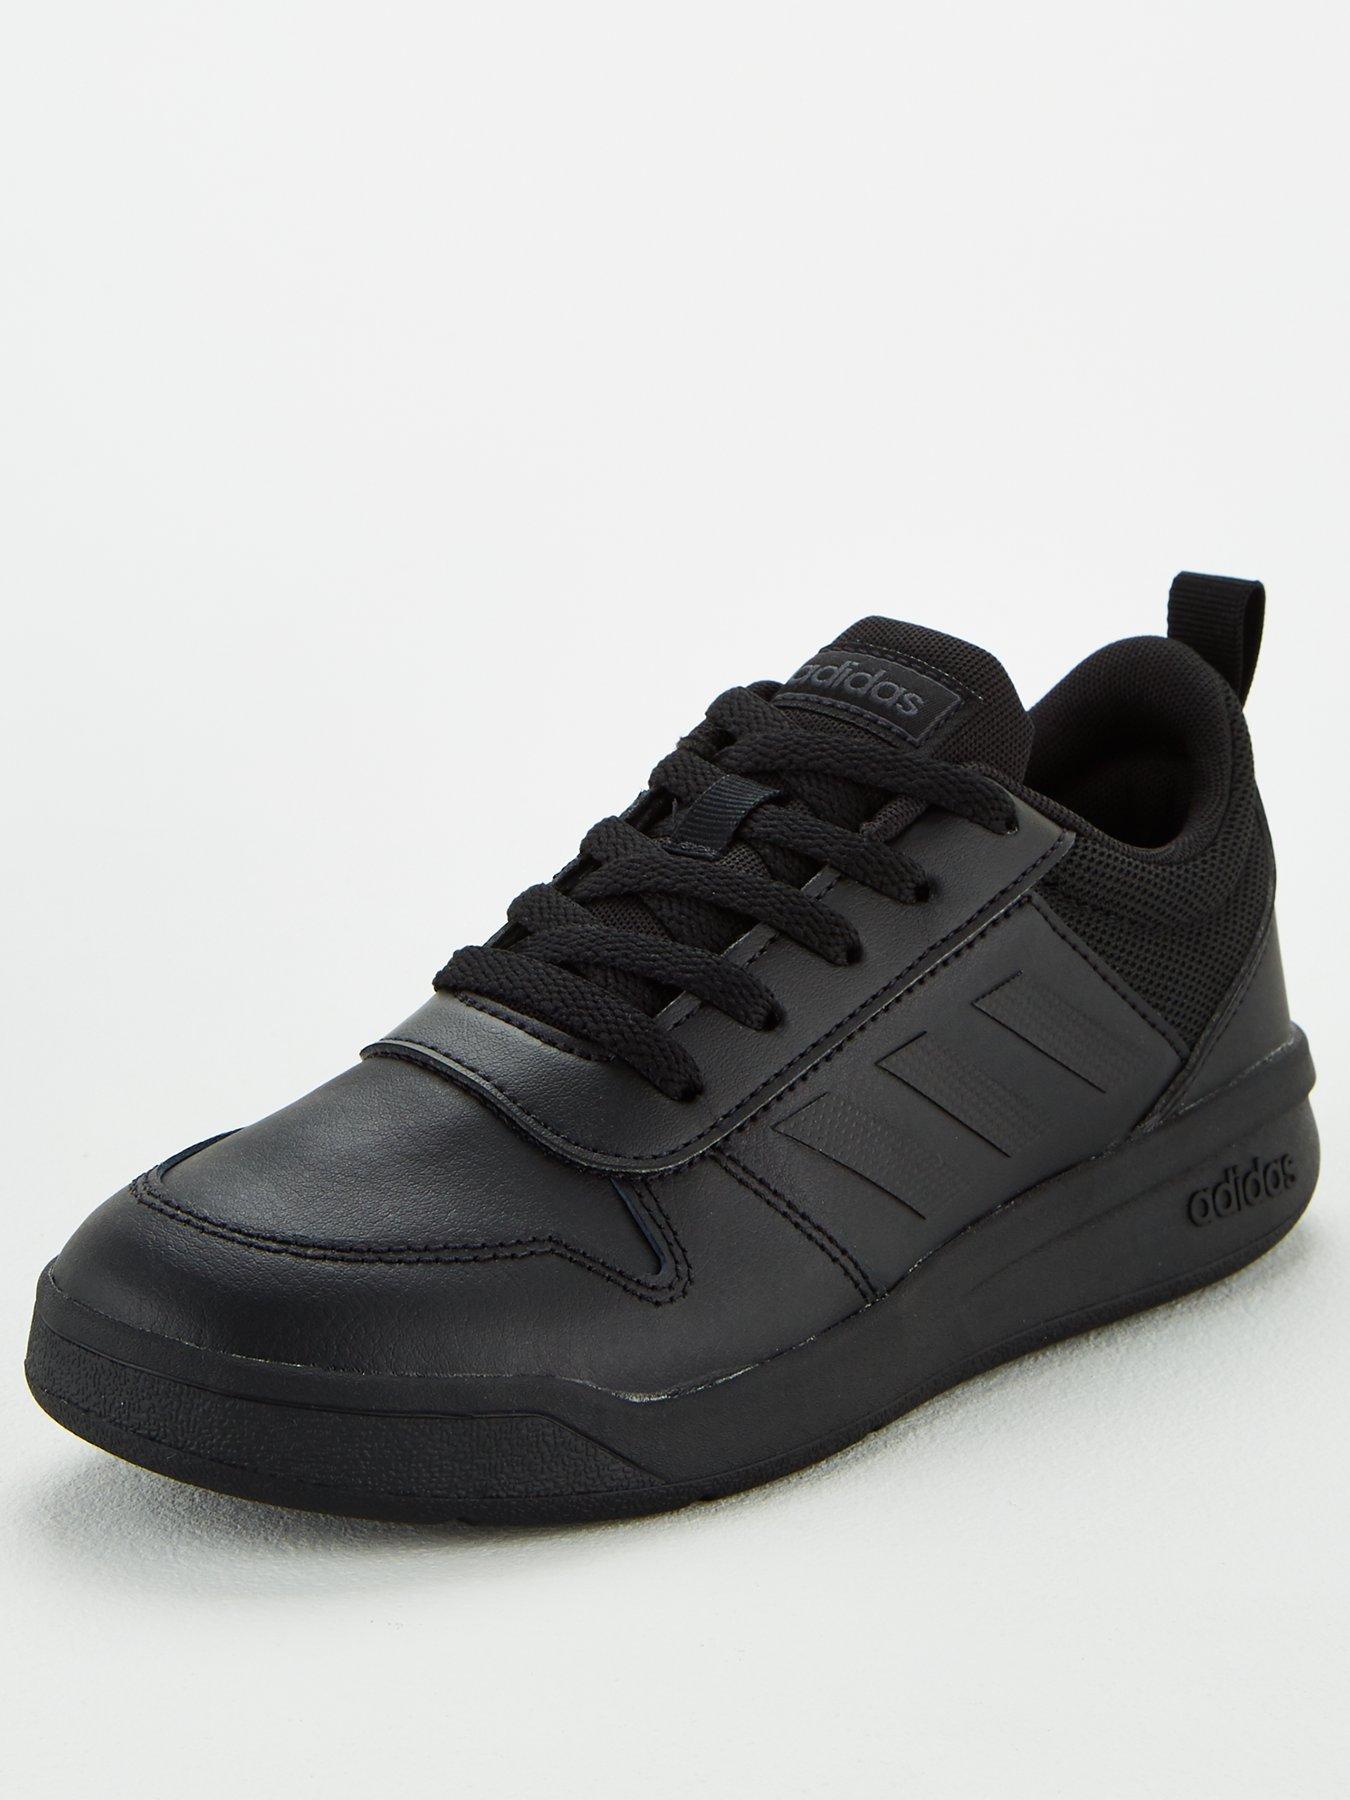 adidas full black trainers